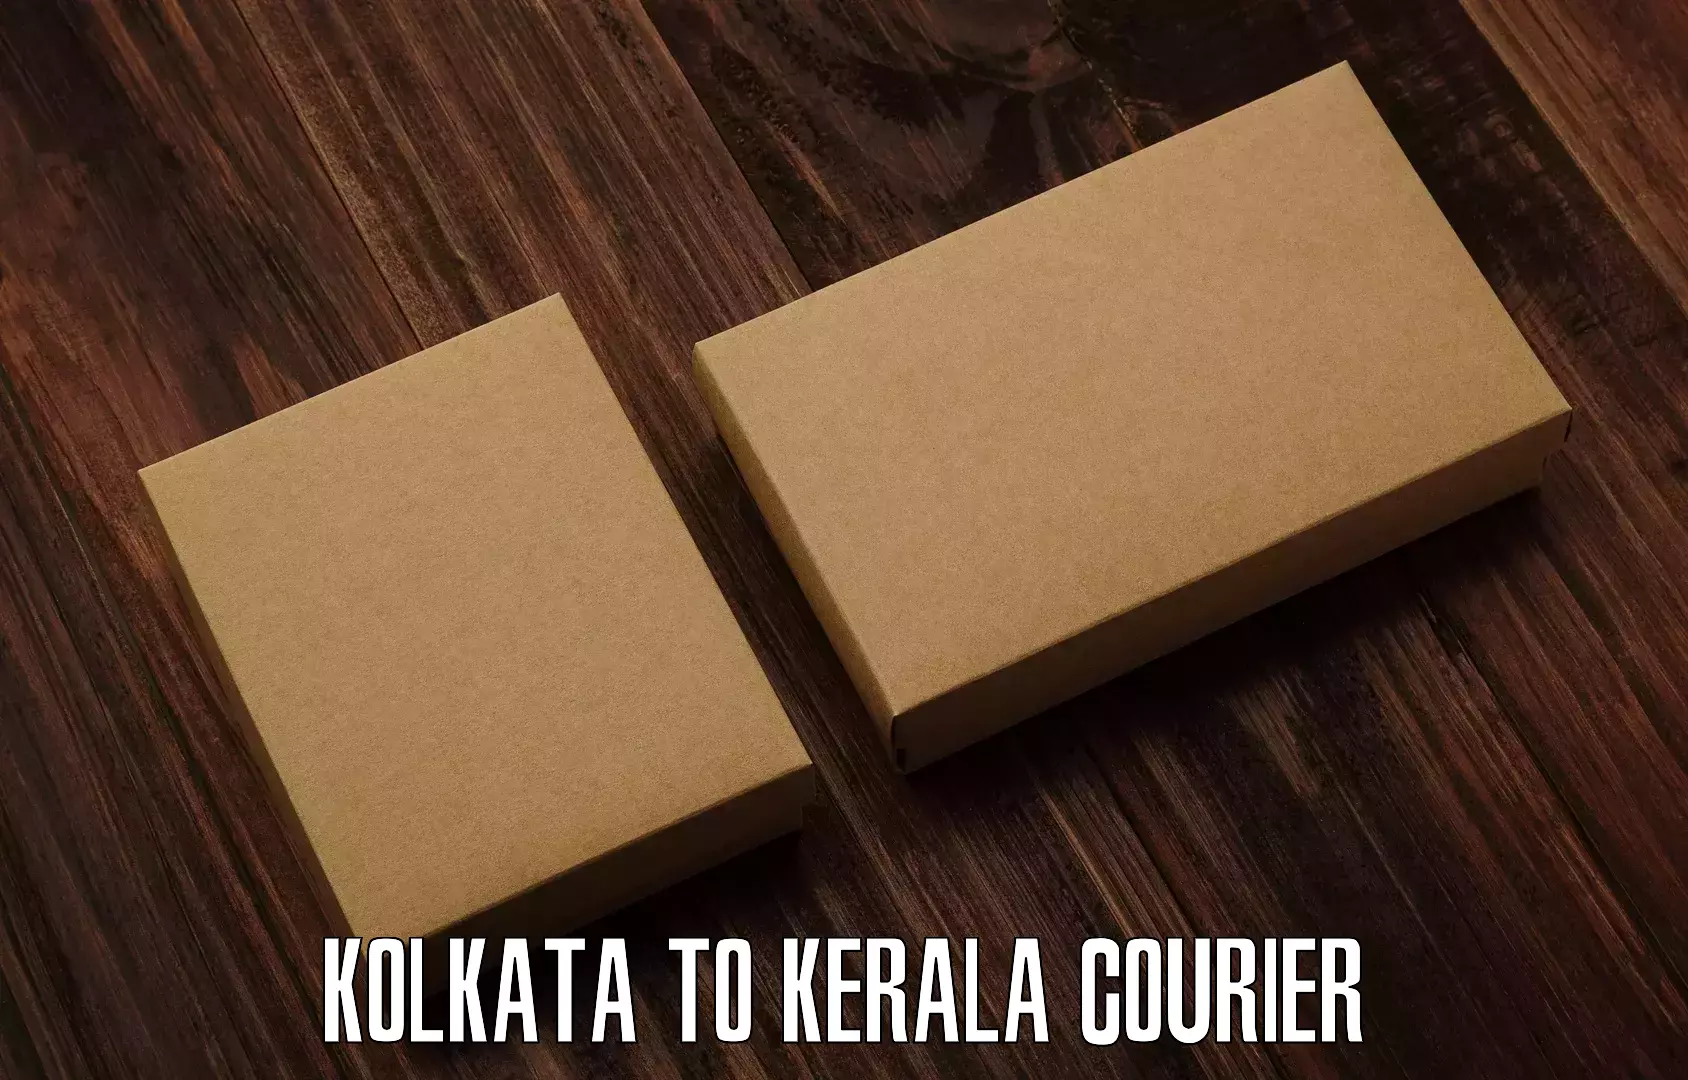 User-friendly courier app Kolkata to Kerala